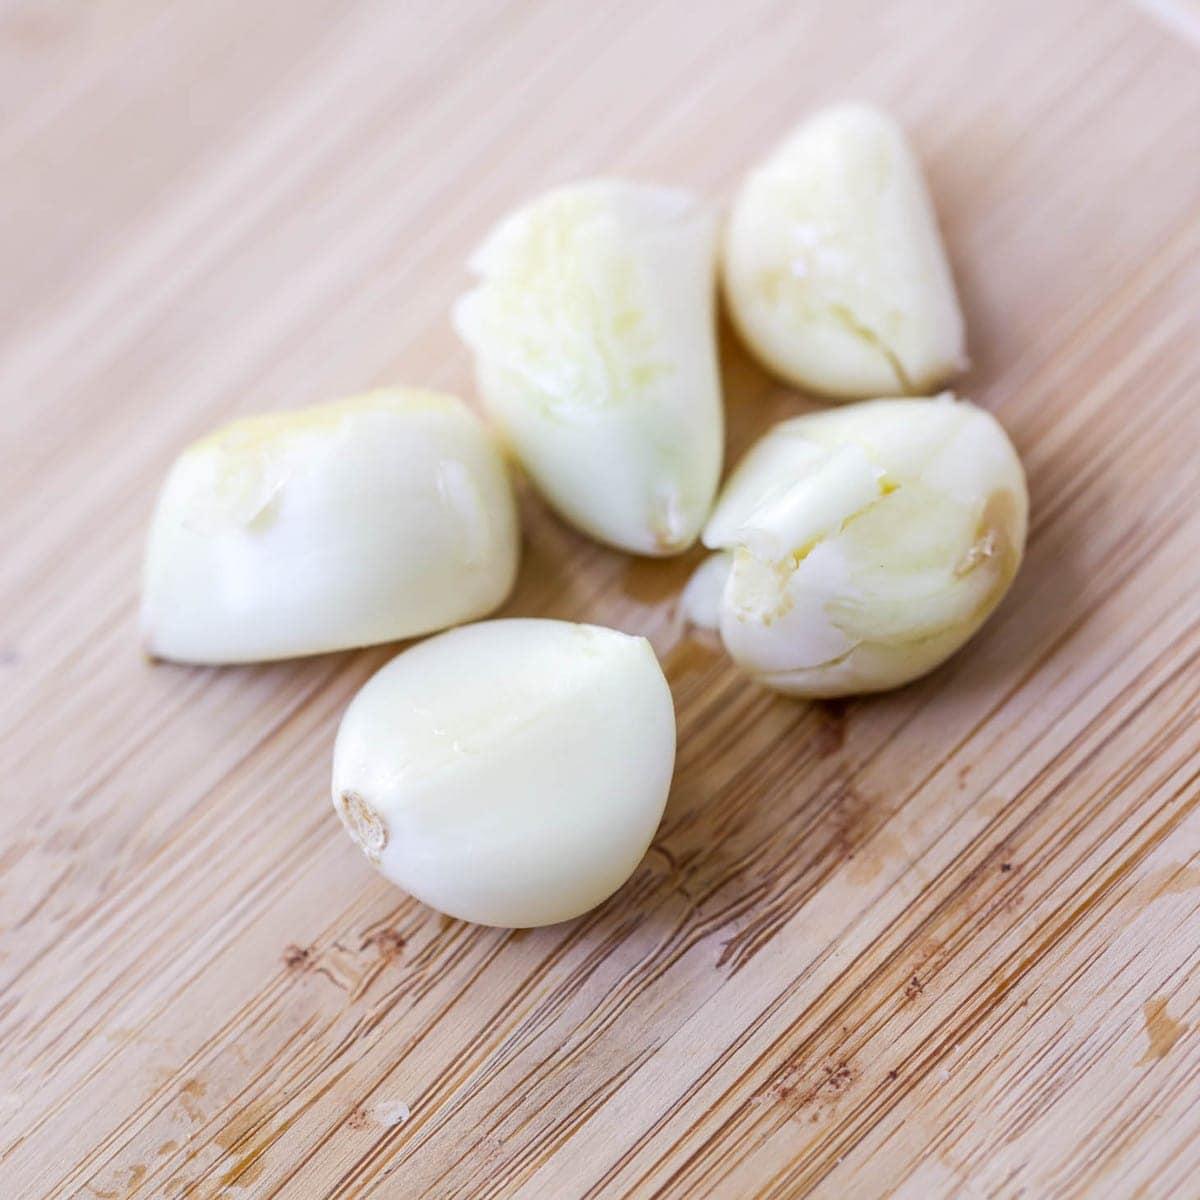 How Many Teaspoons is 5 Cloves of Garlic? 